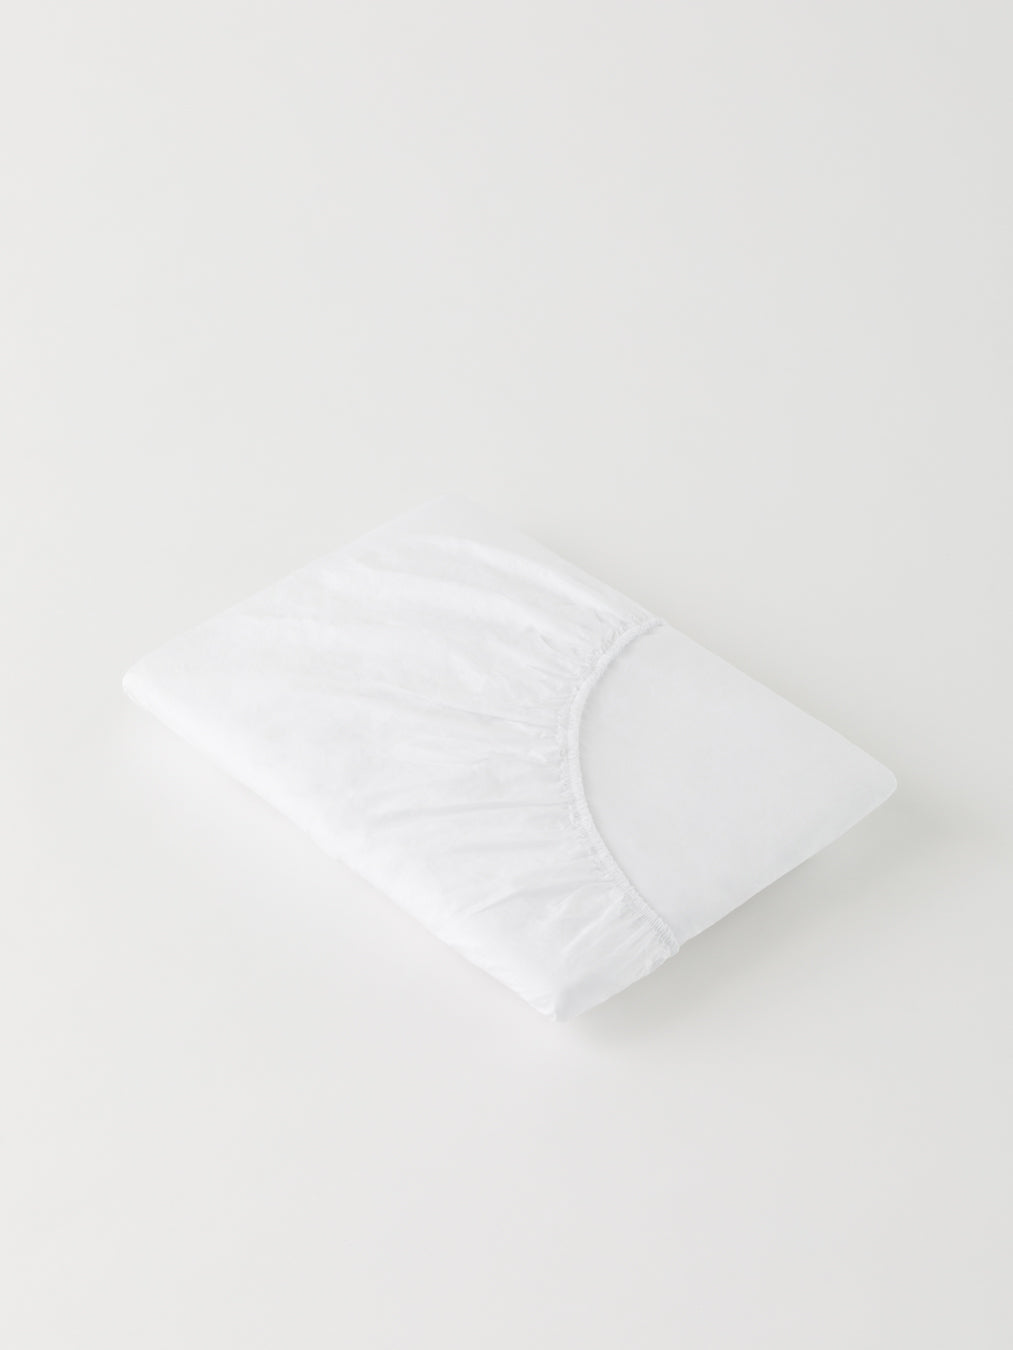 Se DAWN - Percale Faconlagen (180x200x35) - Bright White - 100% økologisk bomuld - Hvidt hos Dawndesigns.dk